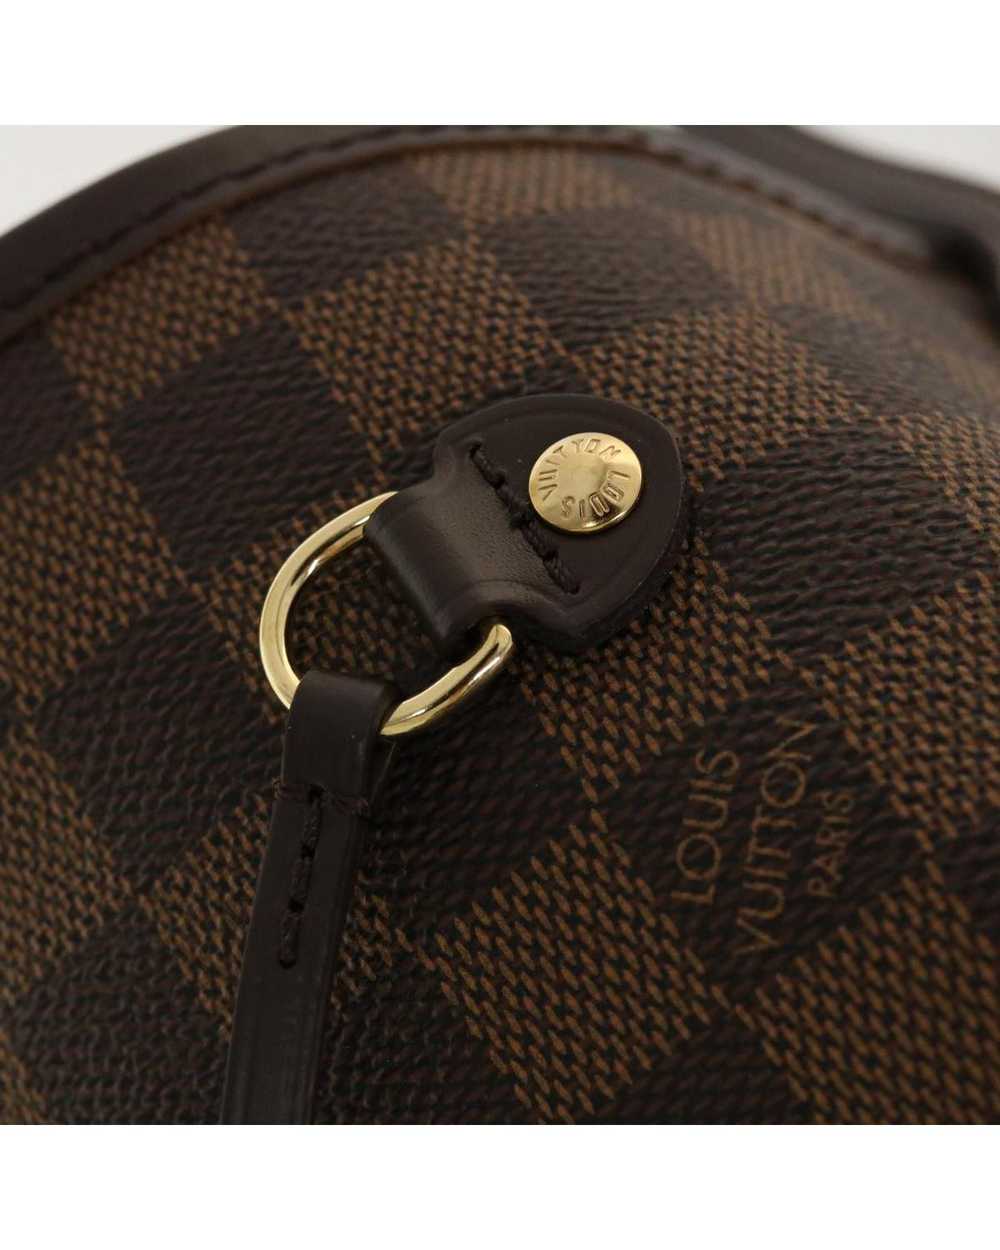 Louis Vuitton Classic Damier Ebene Tote Bag - image 9